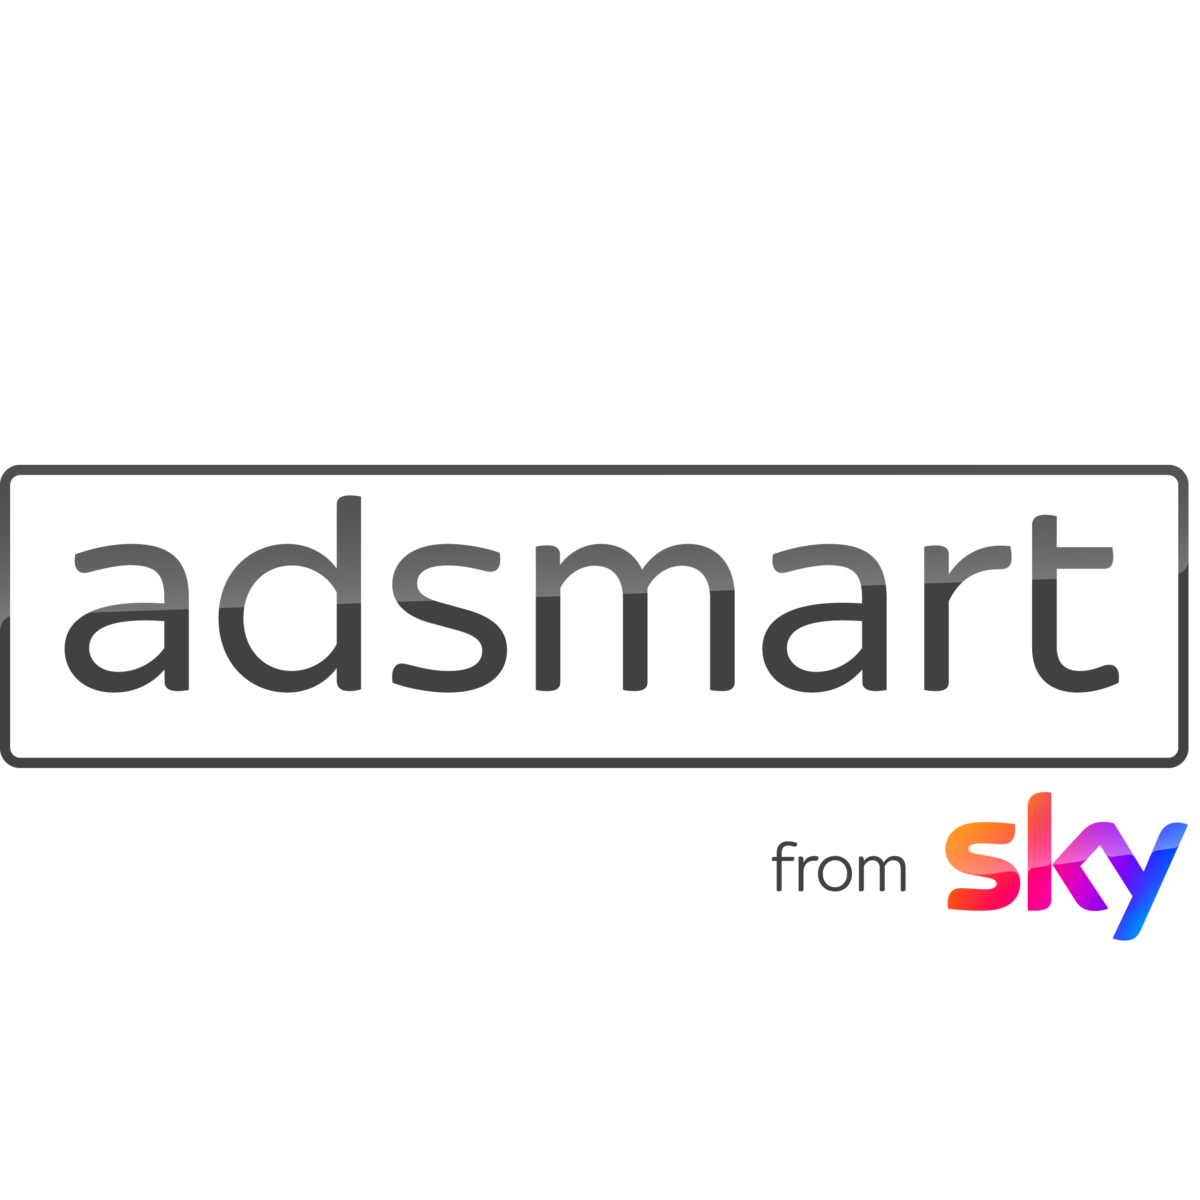 AdSmart from Sky